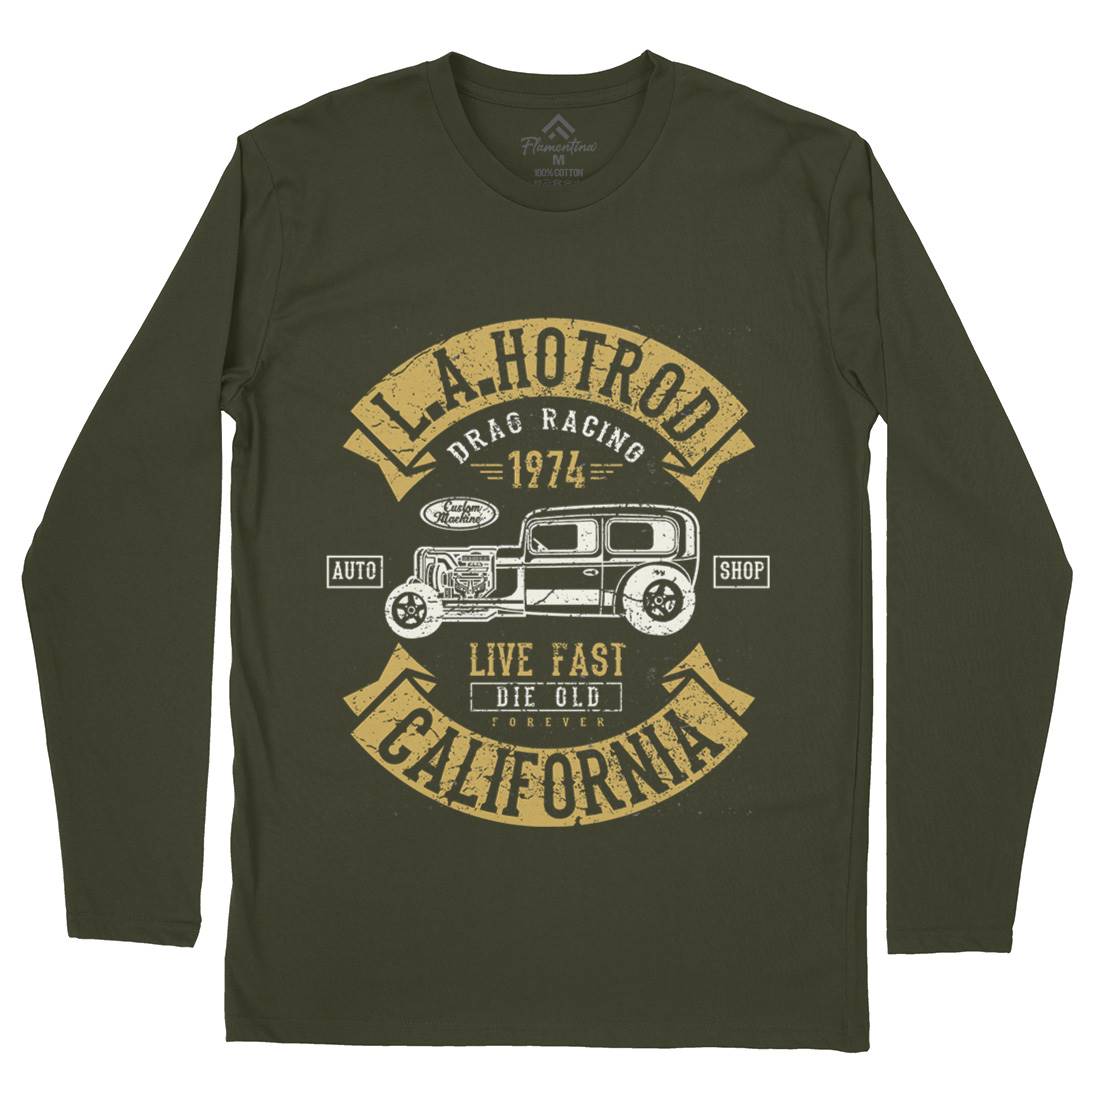 La Hotrod Mens Long Sleeve T-Shirt Cars A080